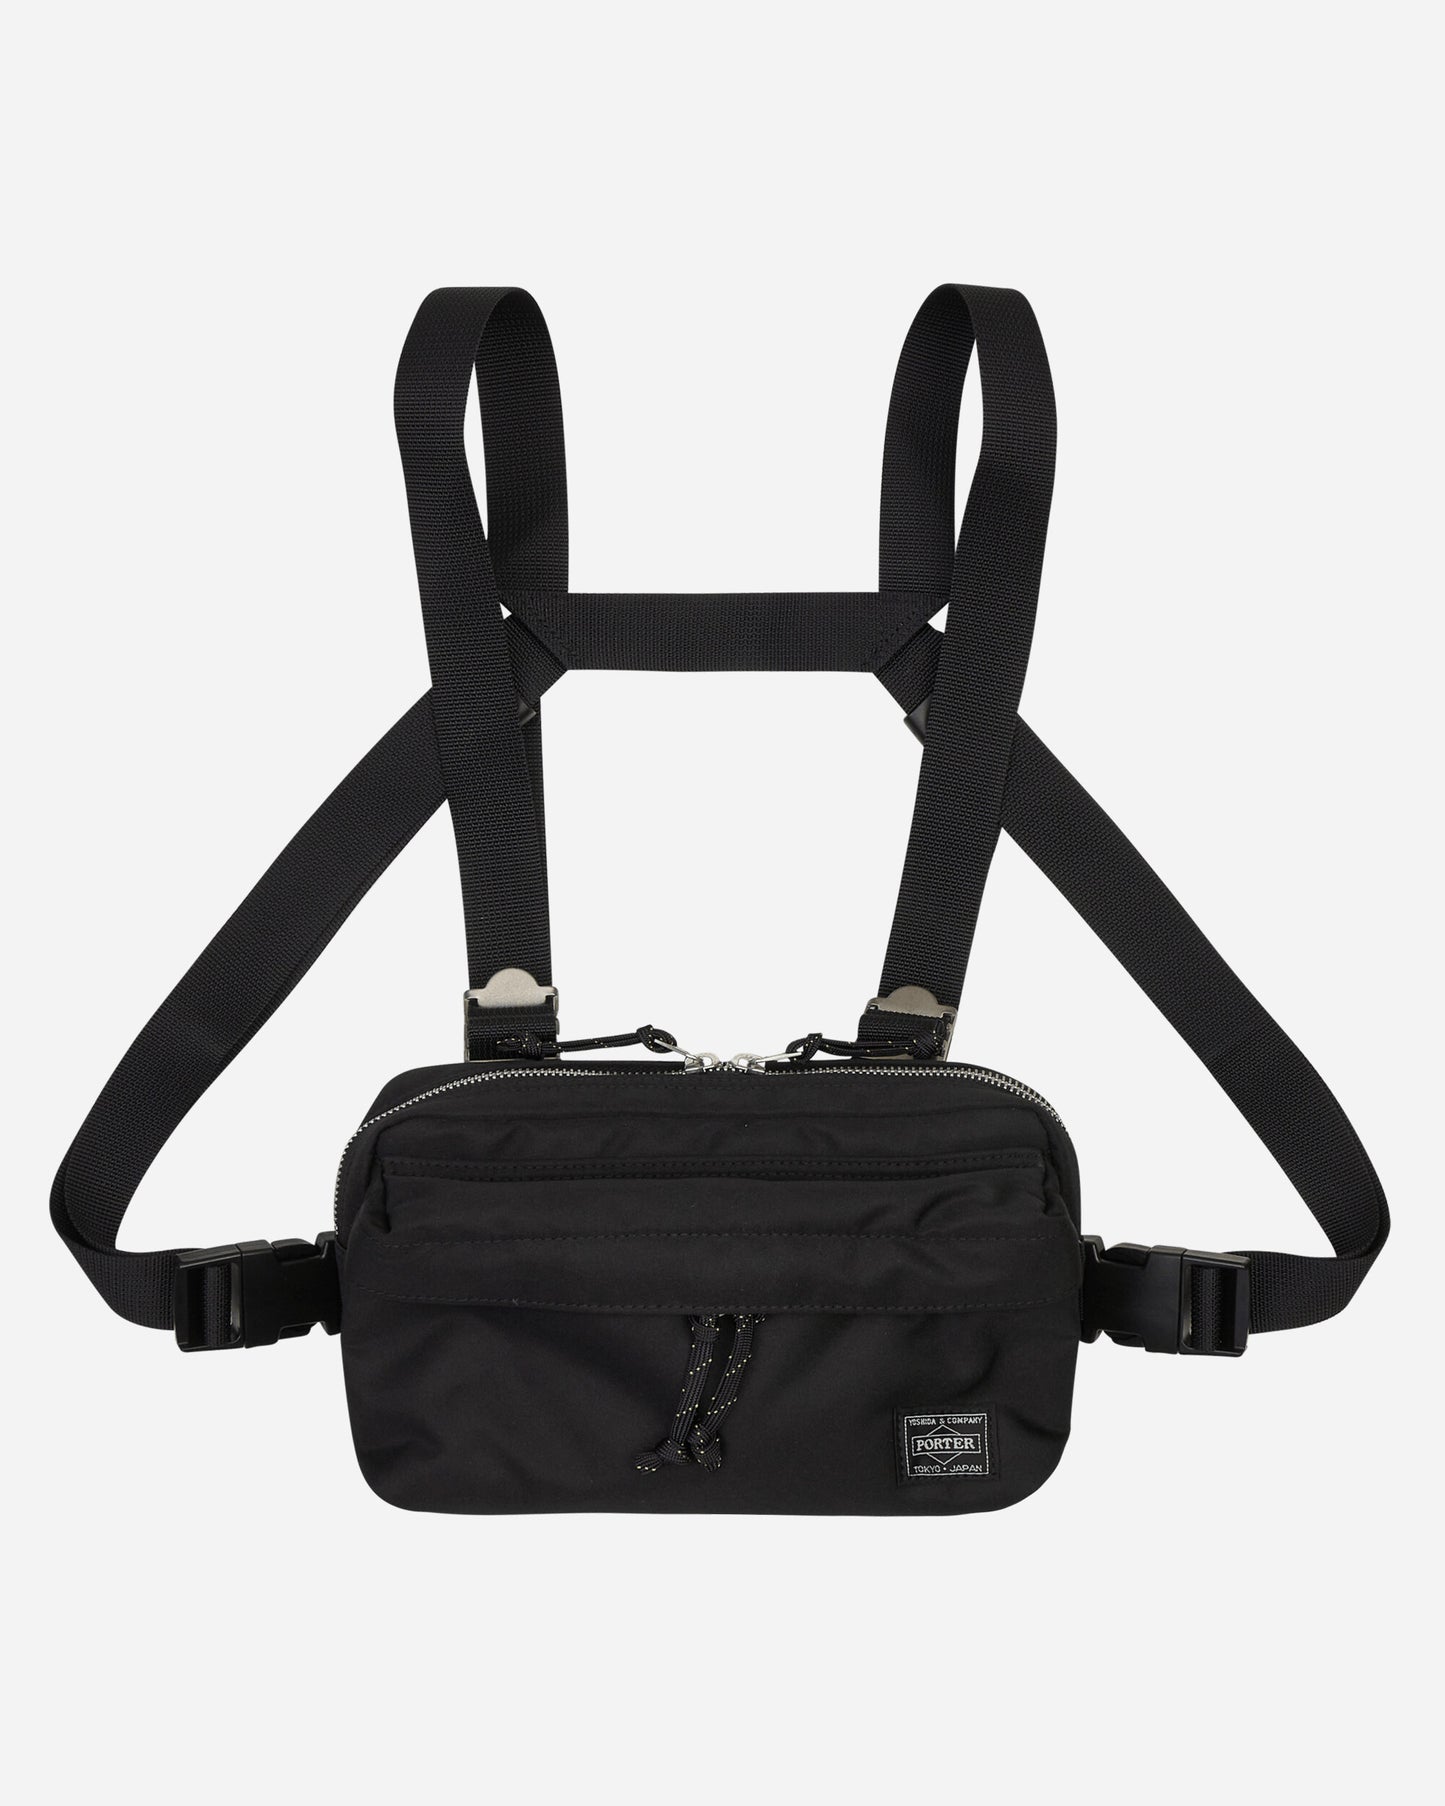 Comme Des Garçons Homme Cross Body Bag X Head Porter Black Bags and Backpacks Waistbags HL-K201-W23 1